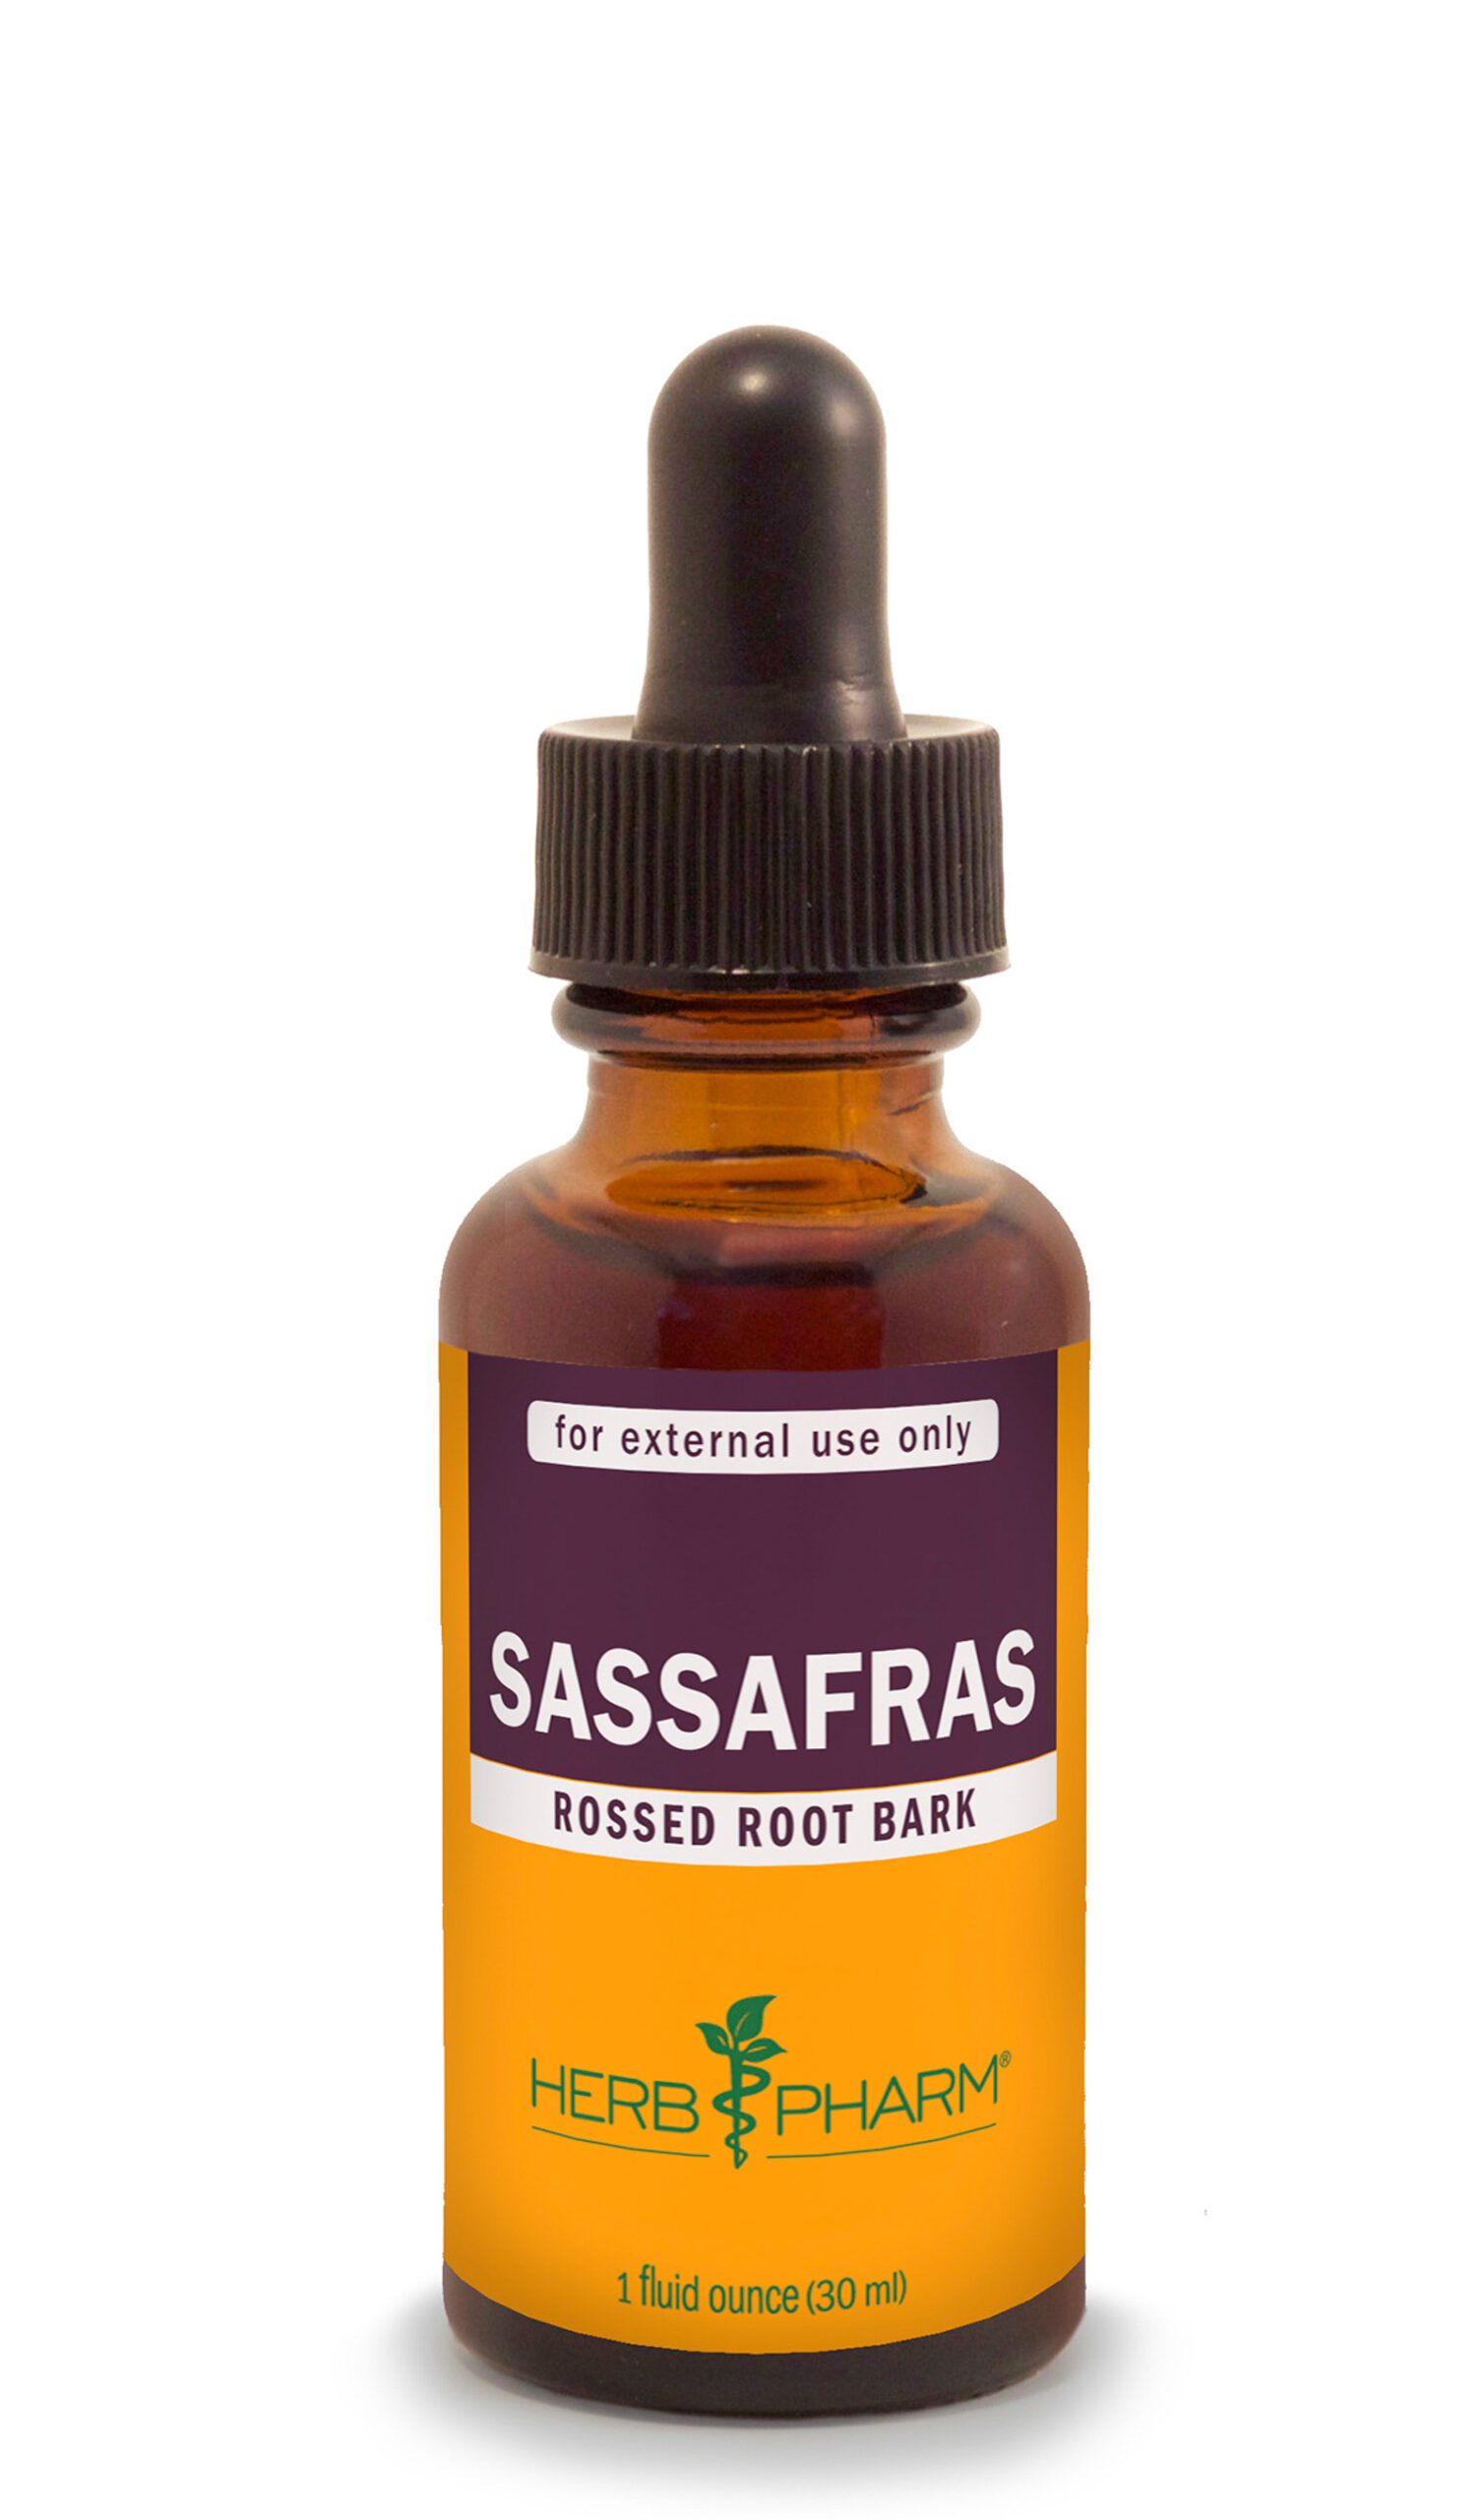 Product Listing Image for Herb Pharm Sassafras Tincture 1oz